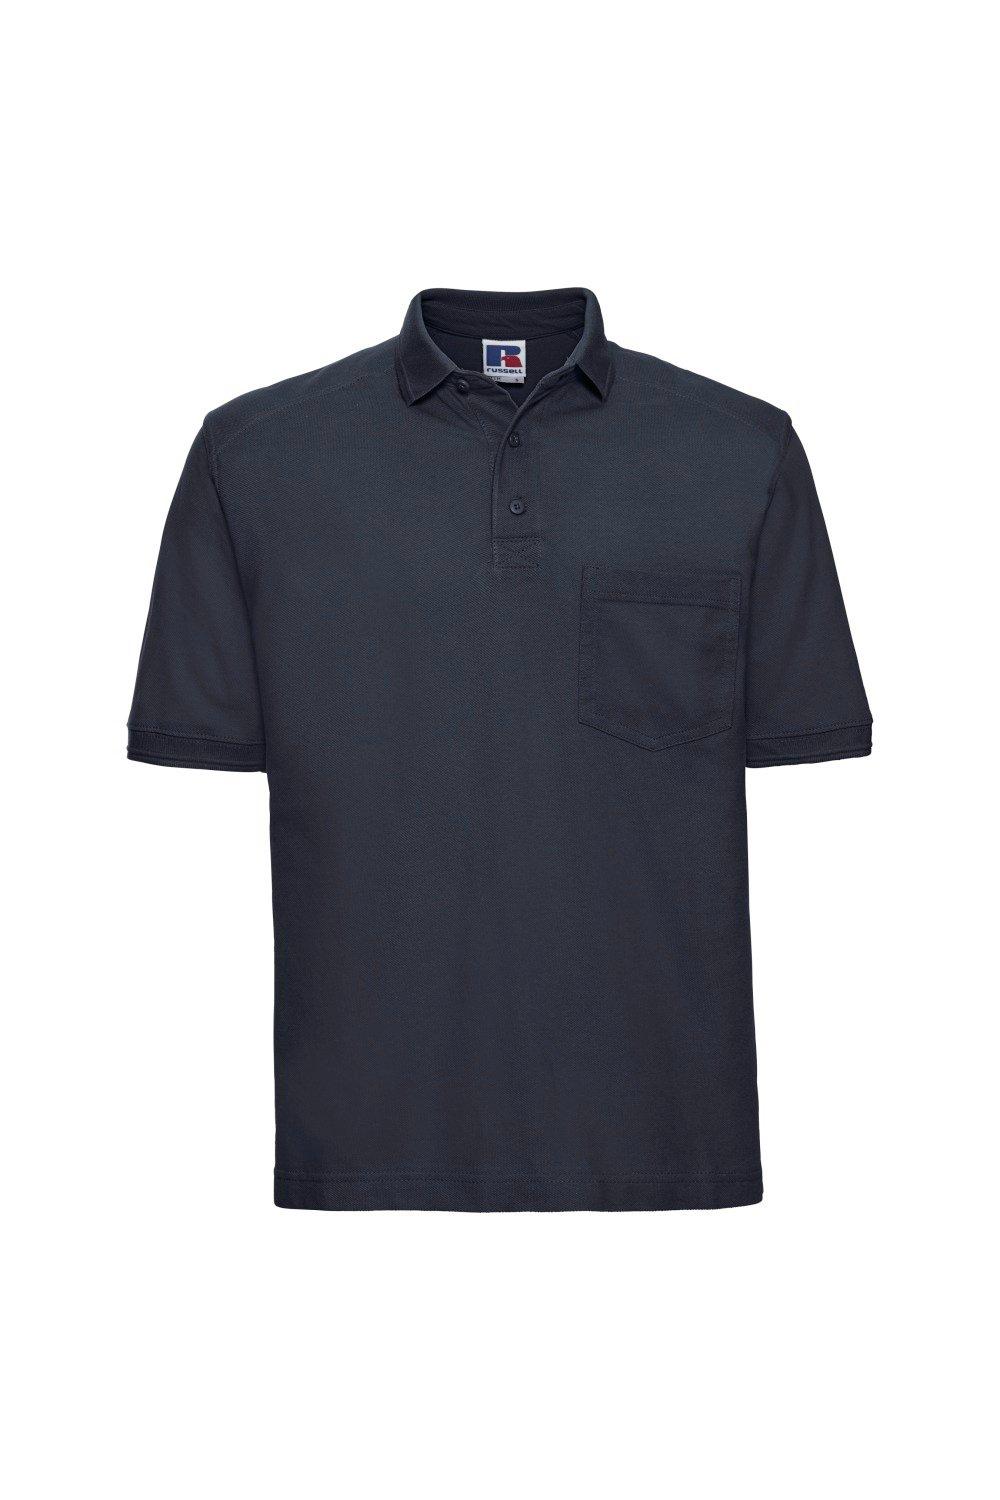 Рубашка поло с короткими рукавами и спецодеждой Russell, темно-синий printio рубашка поло рубашка цигун